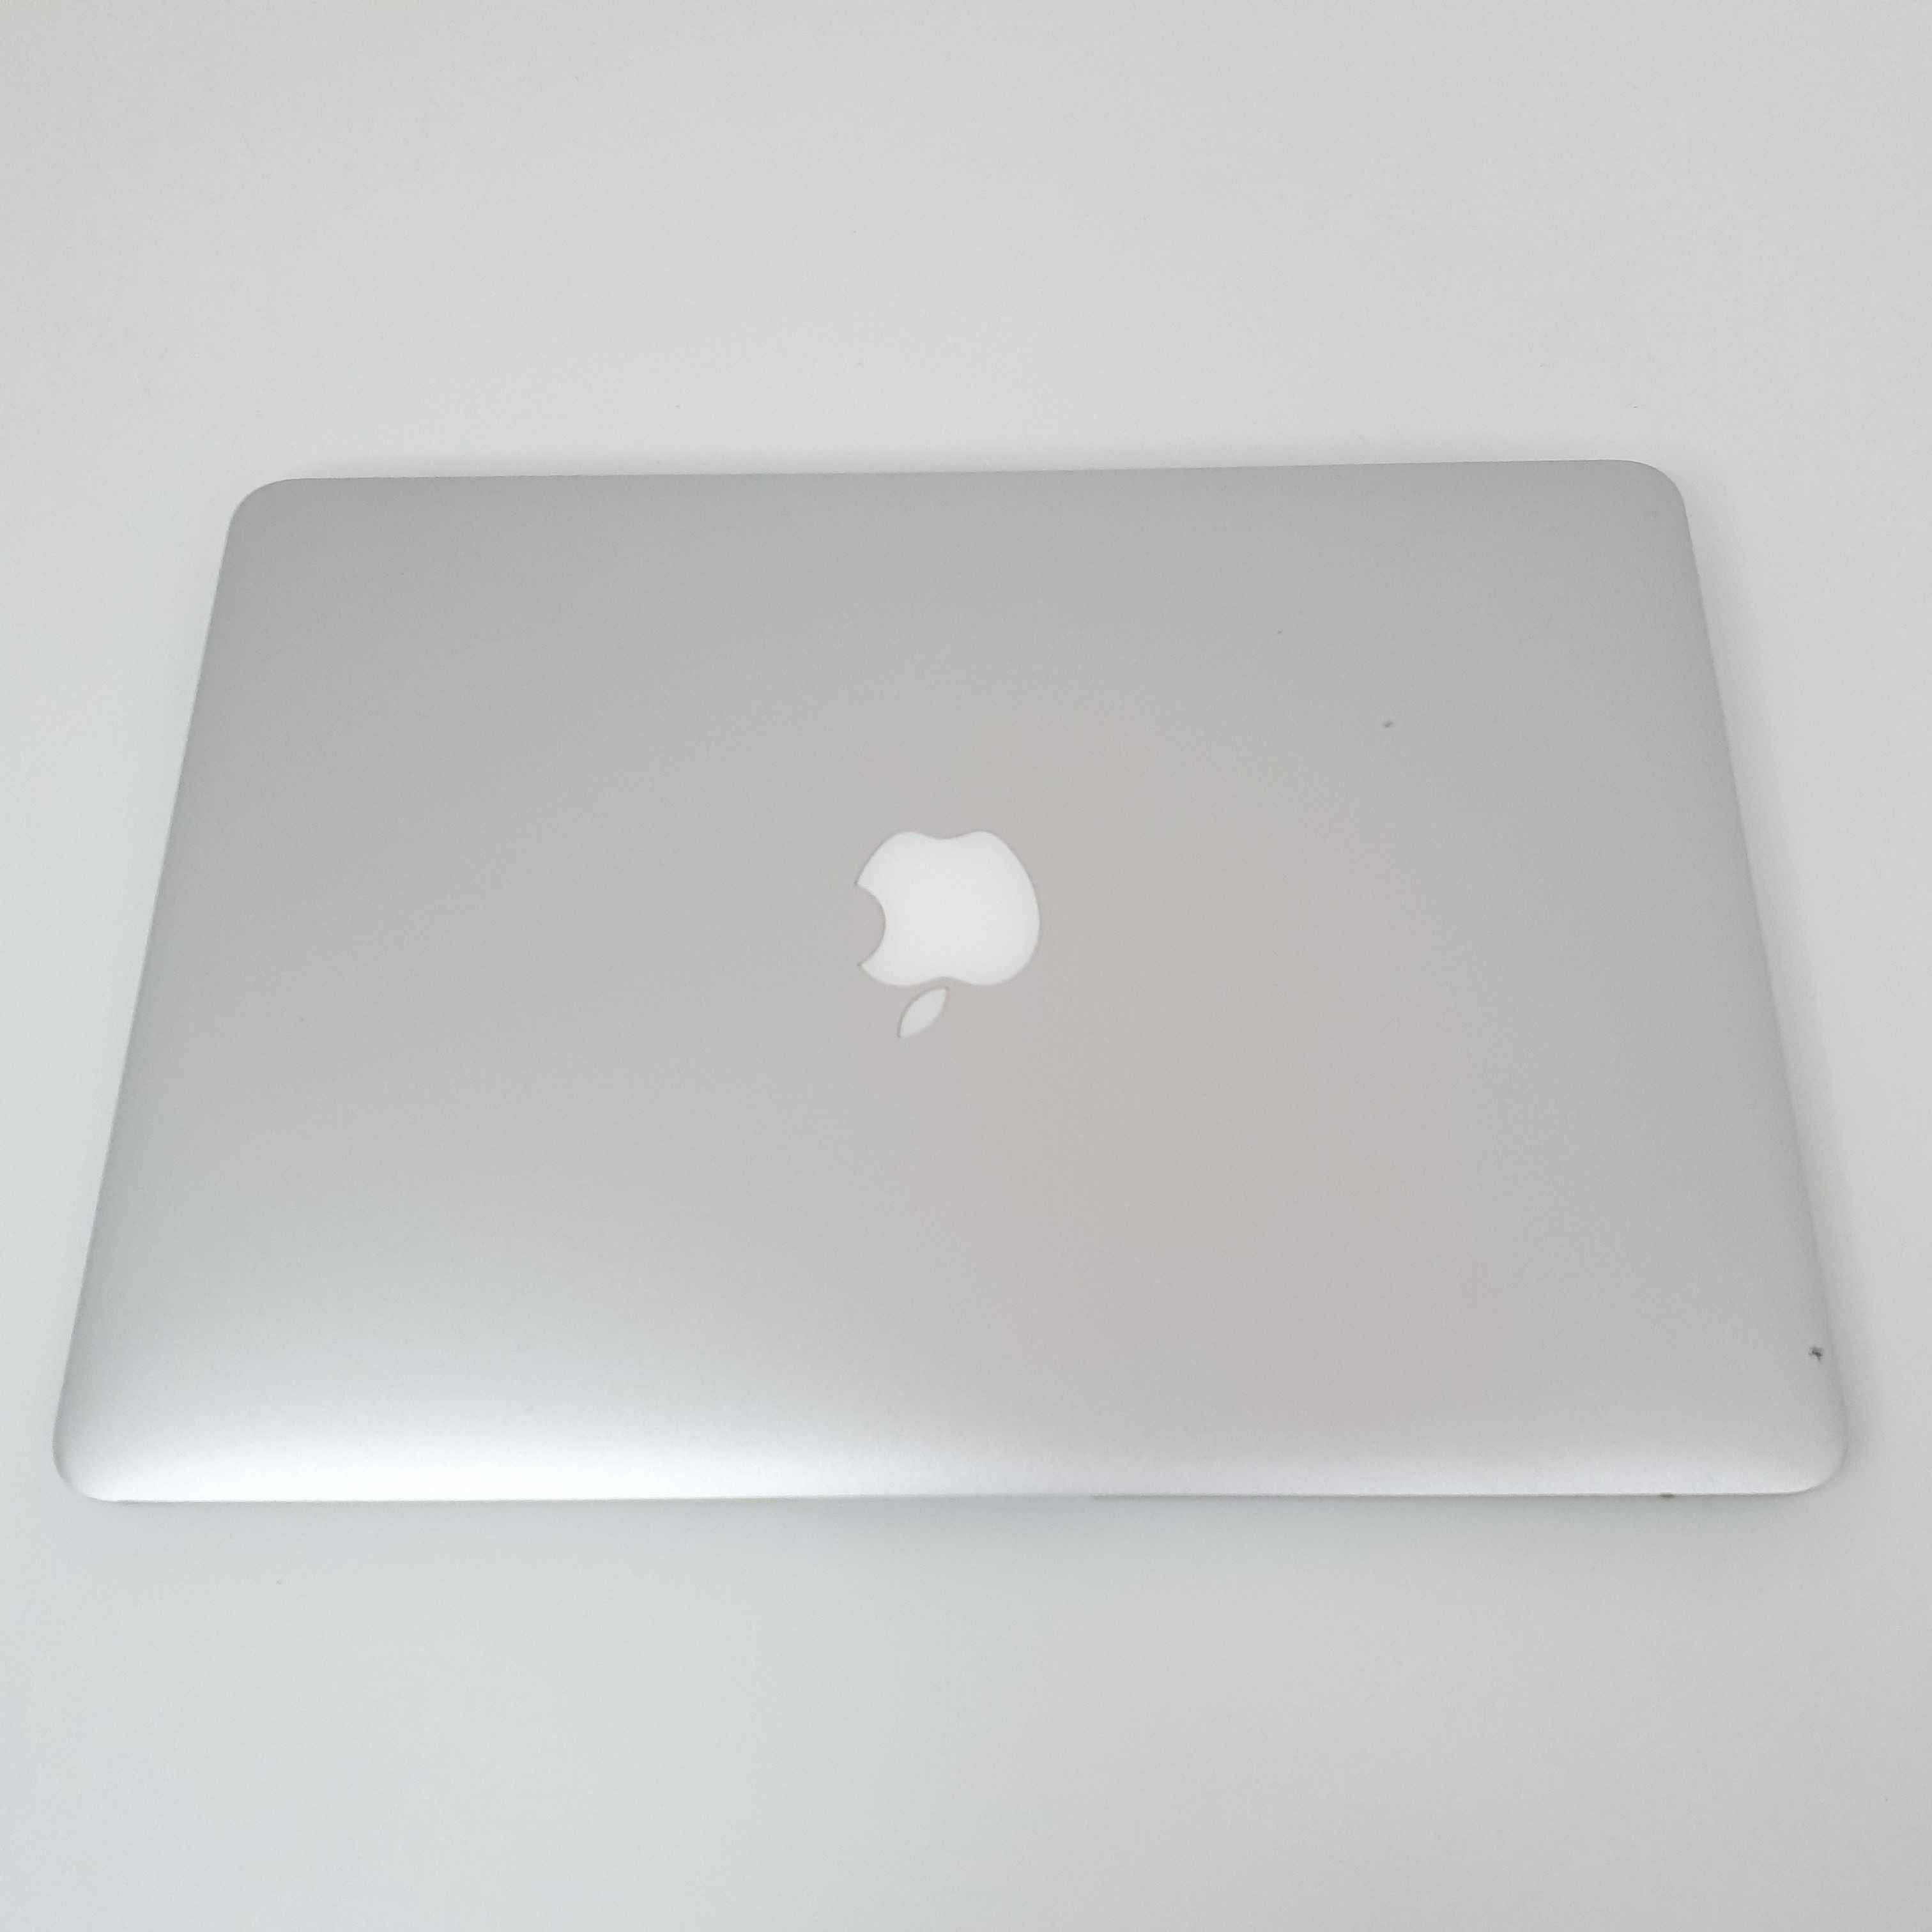 Apple MacBook Air "Core i7" 2.0GHz 13" (Mid-2012) 4GB/256SSD GW12mcs